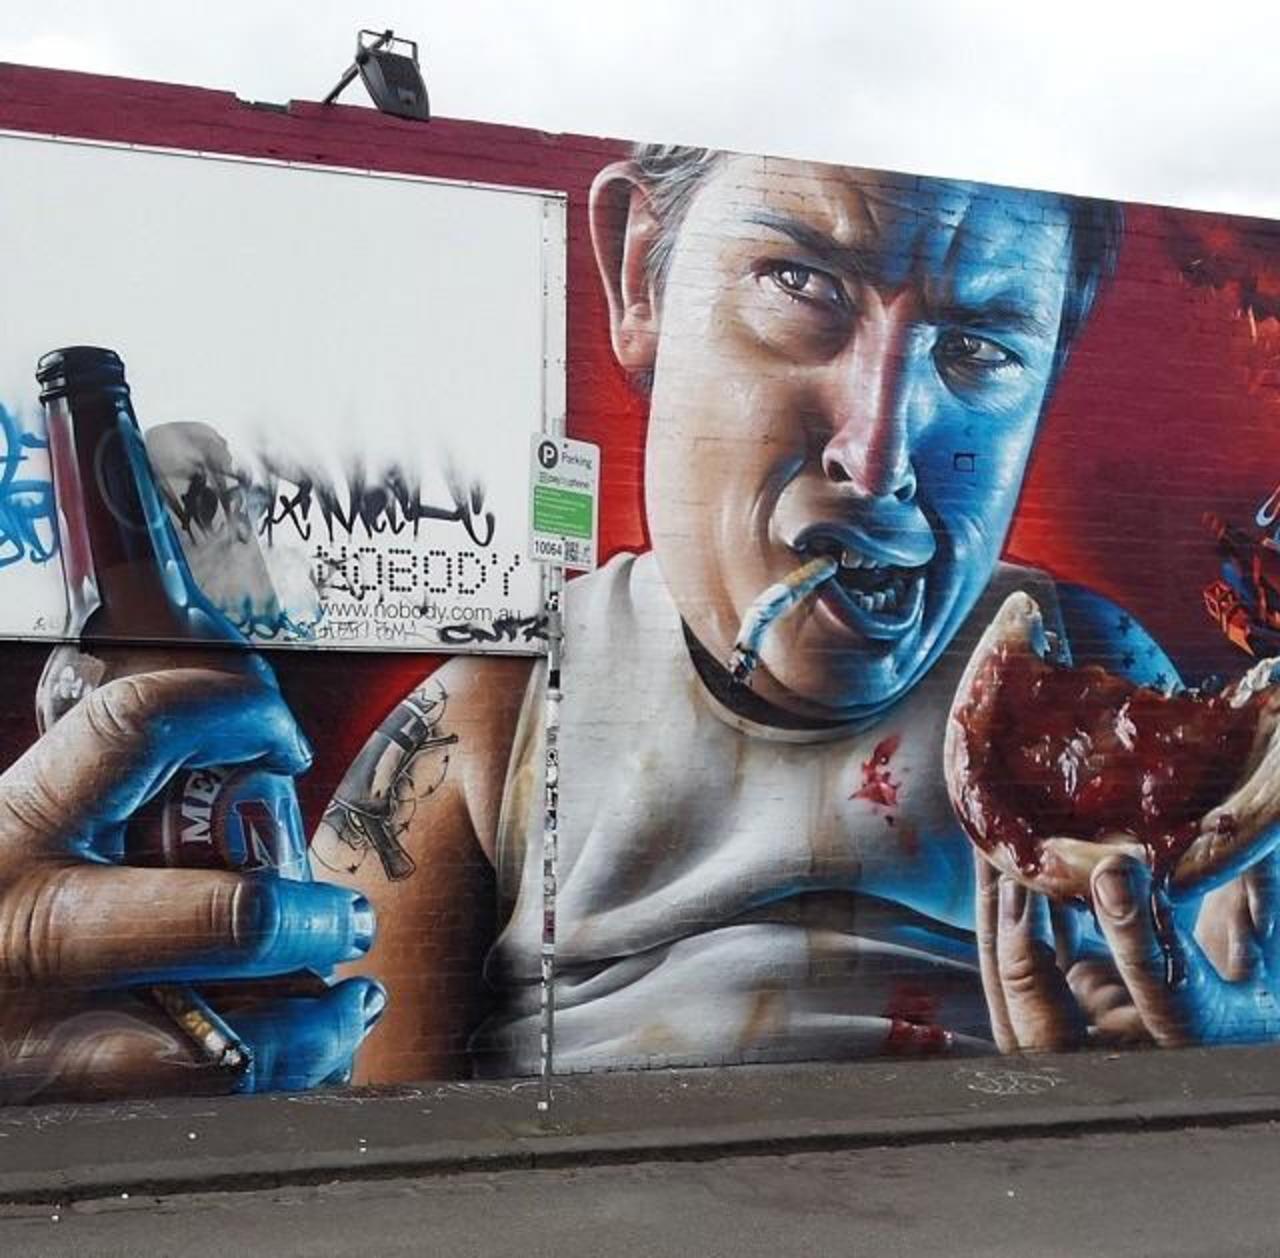 Smug One x Sofles x Adnate hyperrealistic Street Art colab located in Melbourne #art #mural #graffiti #streetart http://t.co/mwSiZNdpOn